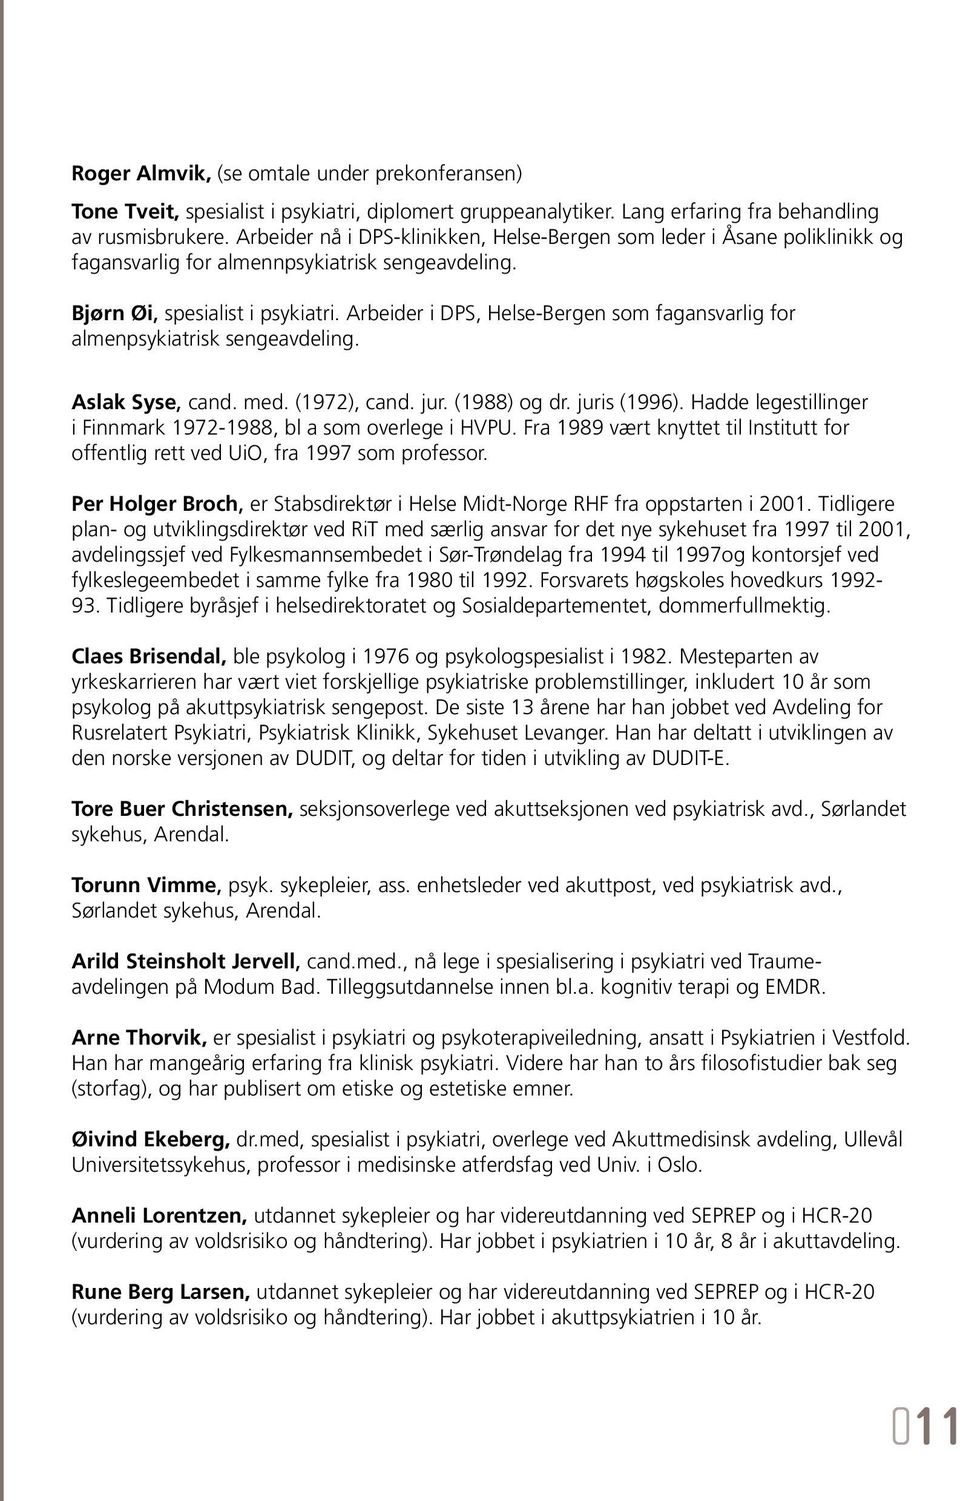 Arbeider i DPS, Helse-Bergen som fagansvarlig for almenpsykiatrisk sengeavdeling. Aslak Syse, cand. med. (1972), cand. jur. (1988) og dr. juris (1996).